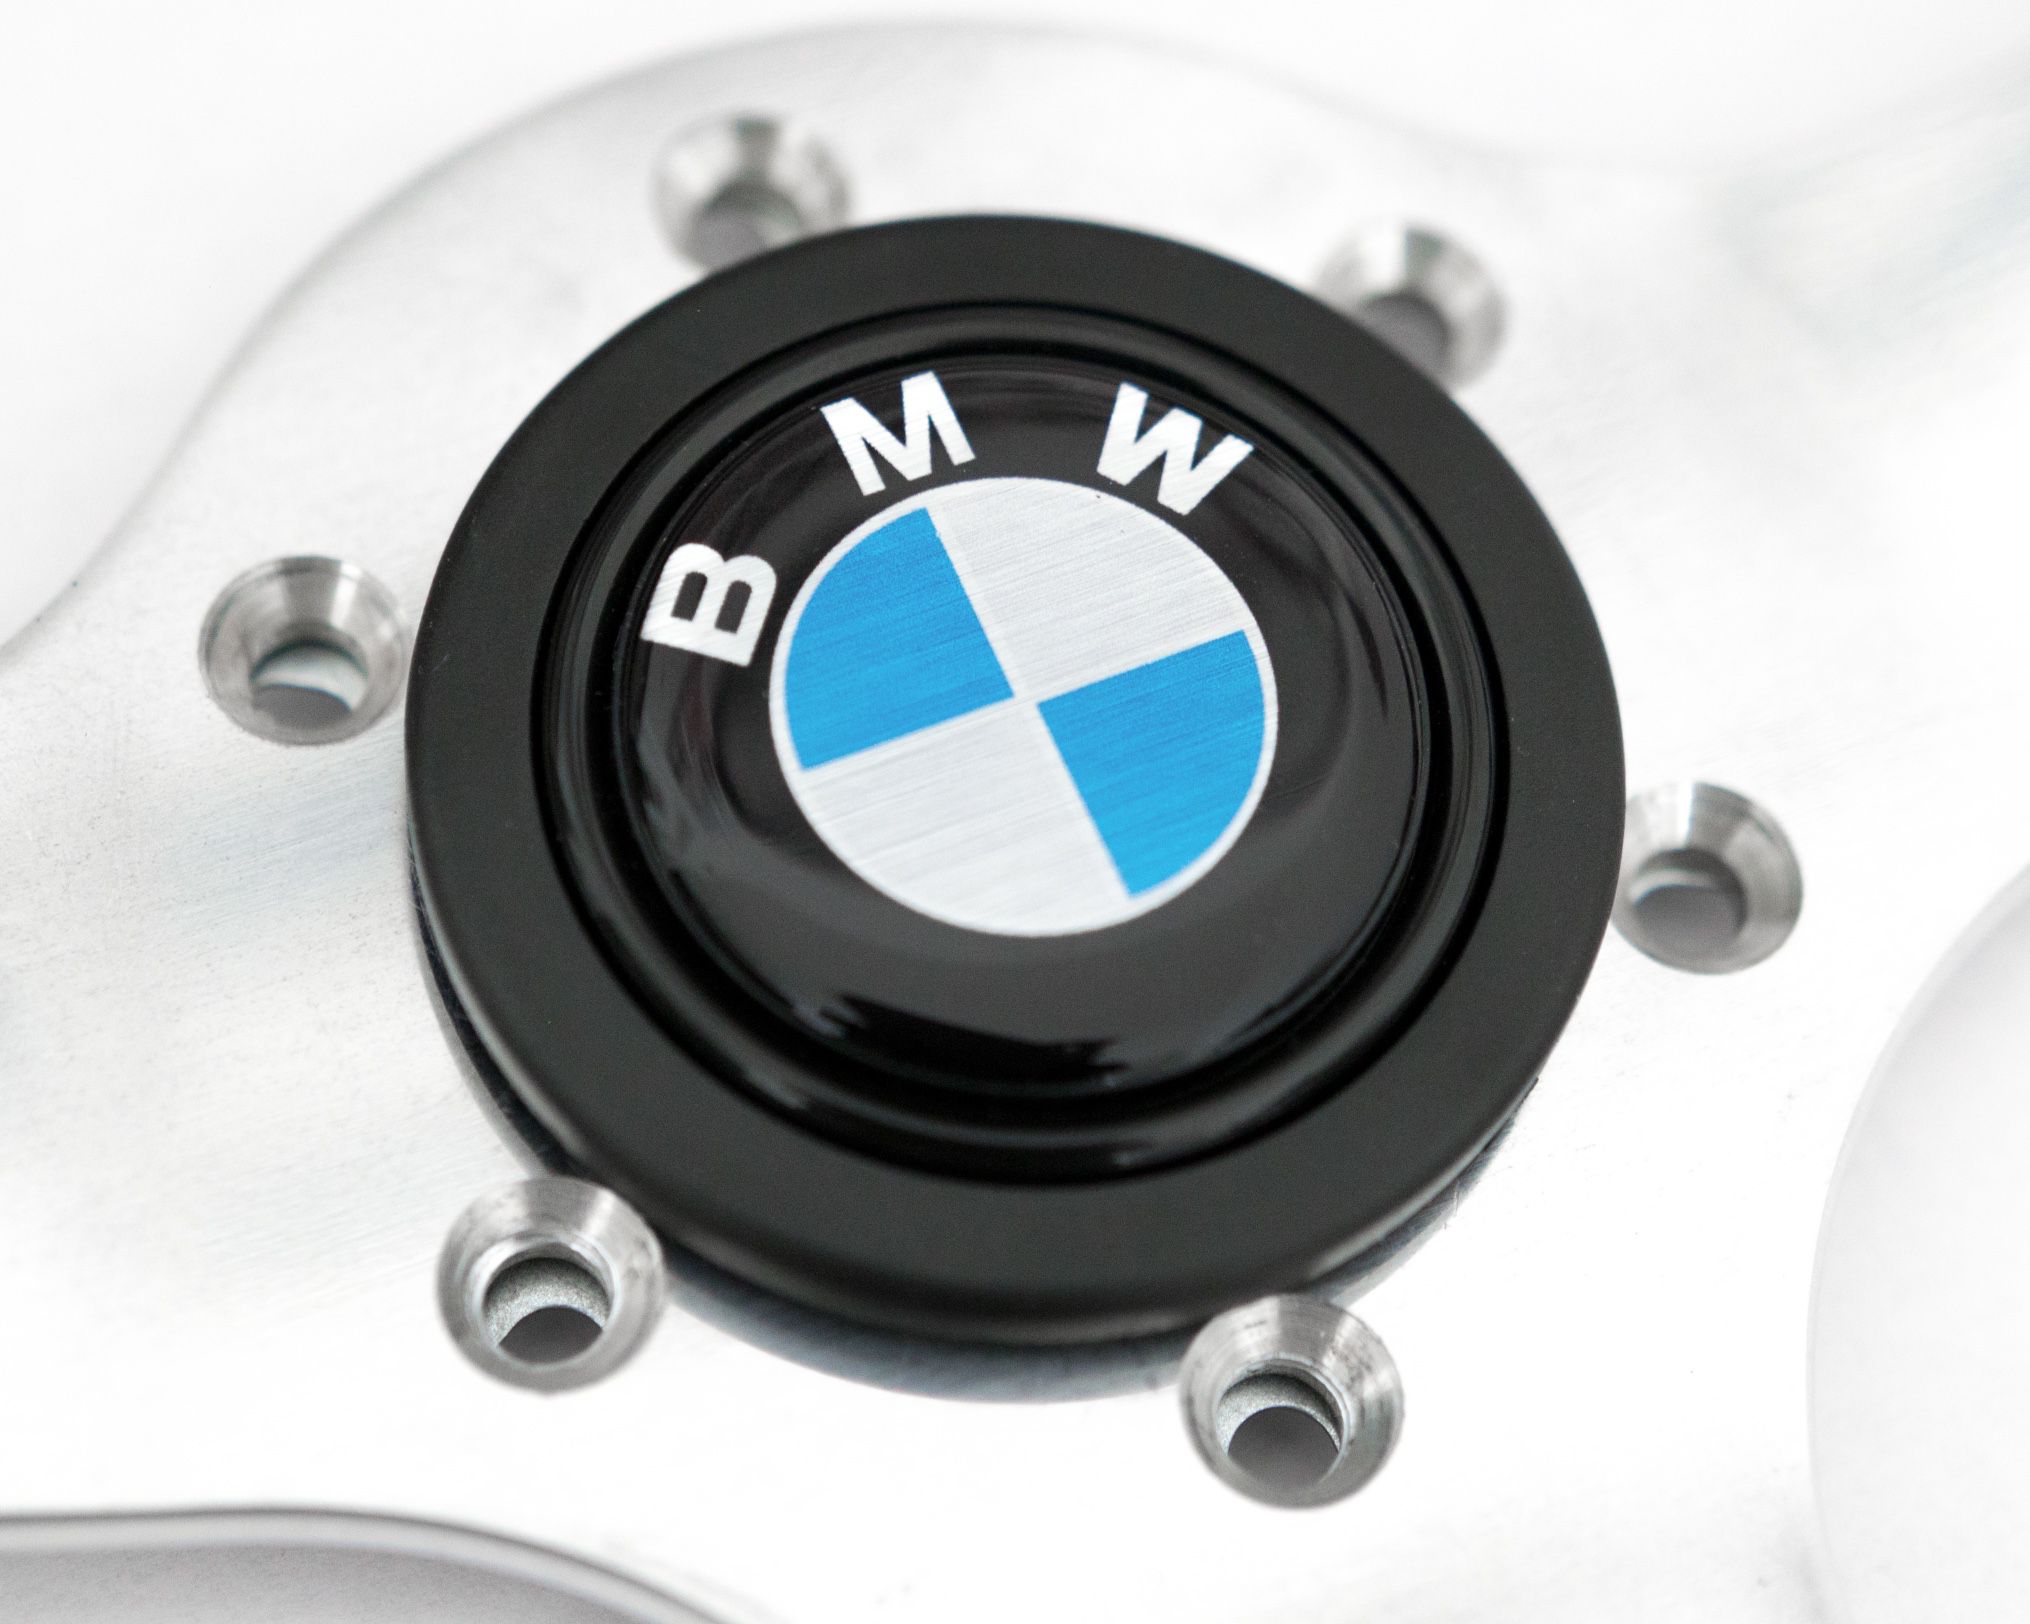 BMW Horn Button (Momo Steering Wheel Nardi OMP Sparco NRG E21 E24 E28 E30 2002 E36 E46 M3 M5 M6 Motorsport)